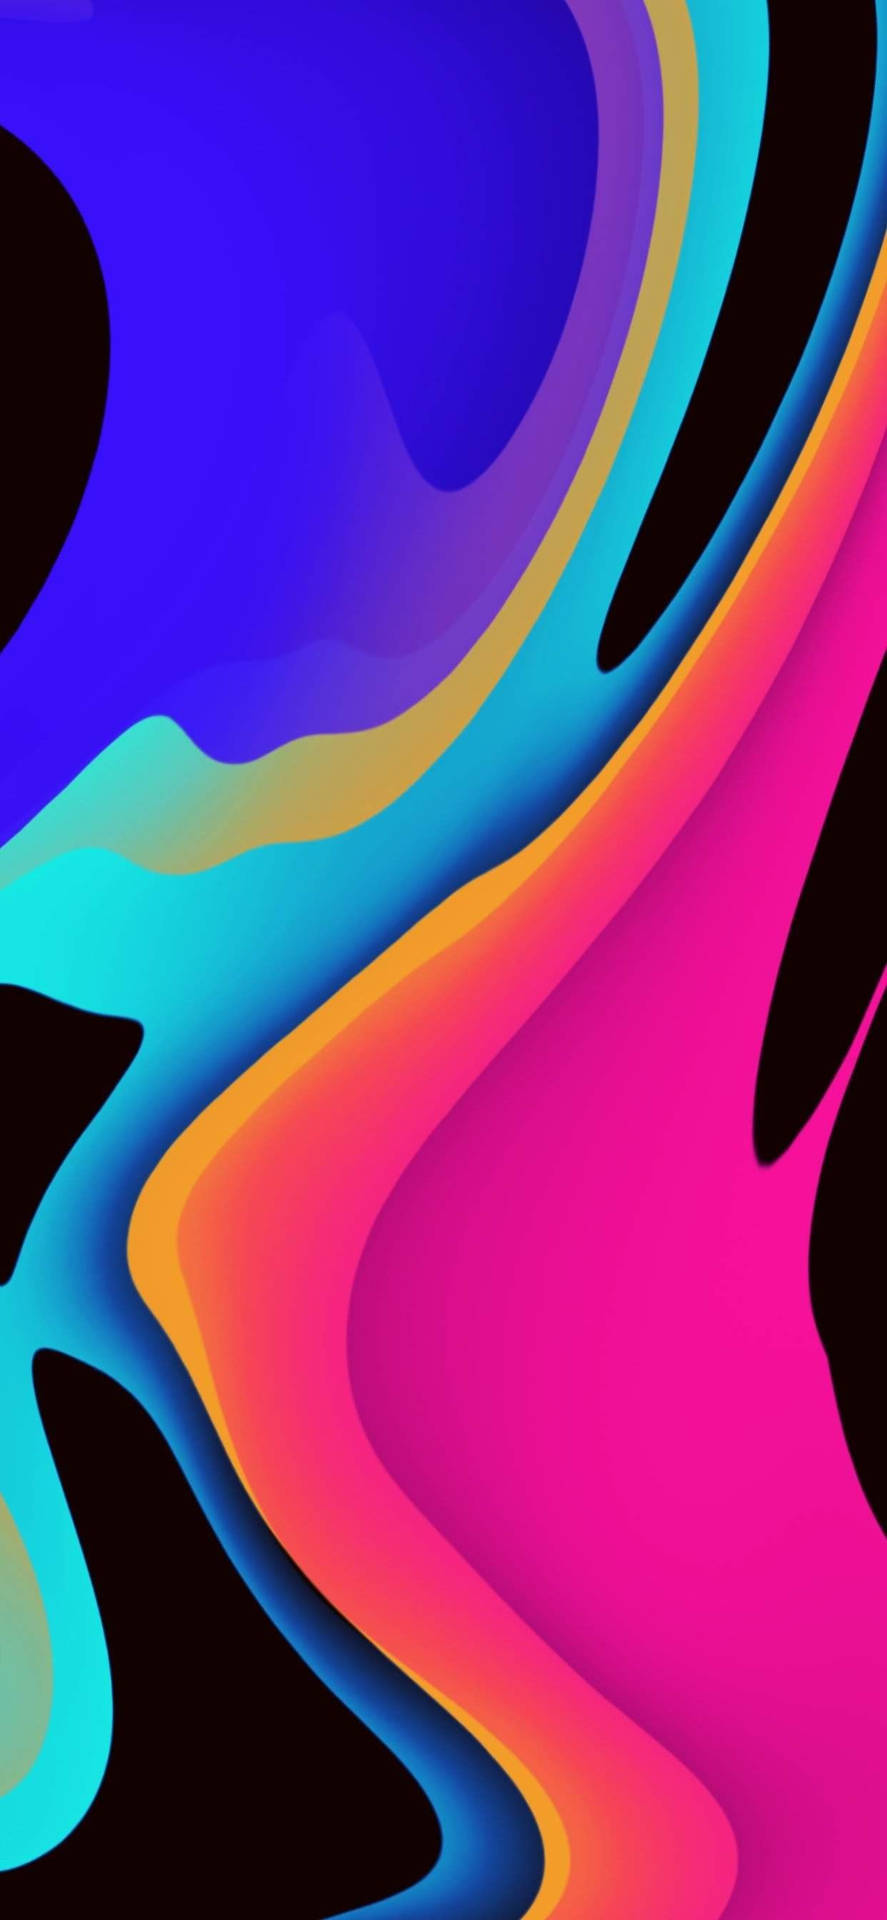 Artedigital Abstracto Colorido Amoled. Fondo de pantalla